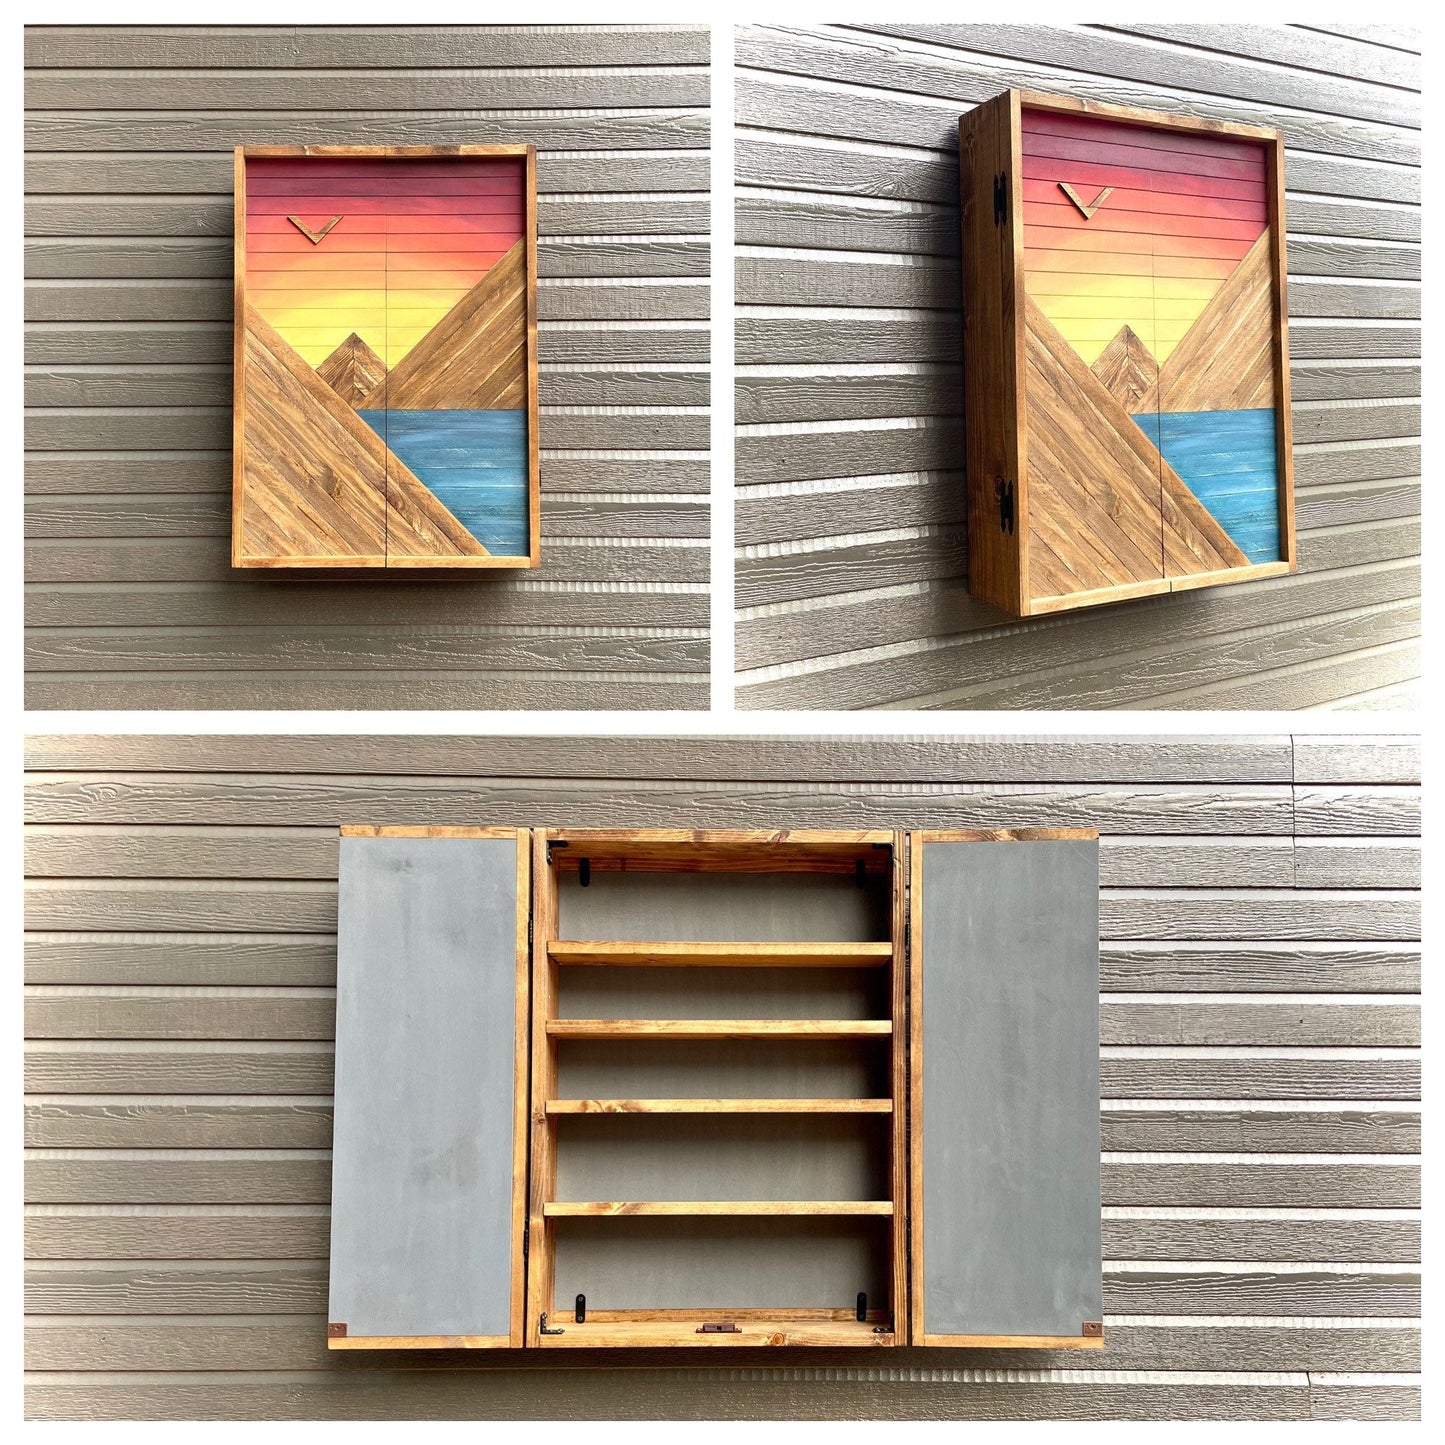 Rustic Mountain Cabinet 30”x24” or 30"x20" Sunset Mountain Art - Bathroom Art - Medicine Cabinet- Liquor Cabinet - Rustic Cabinet